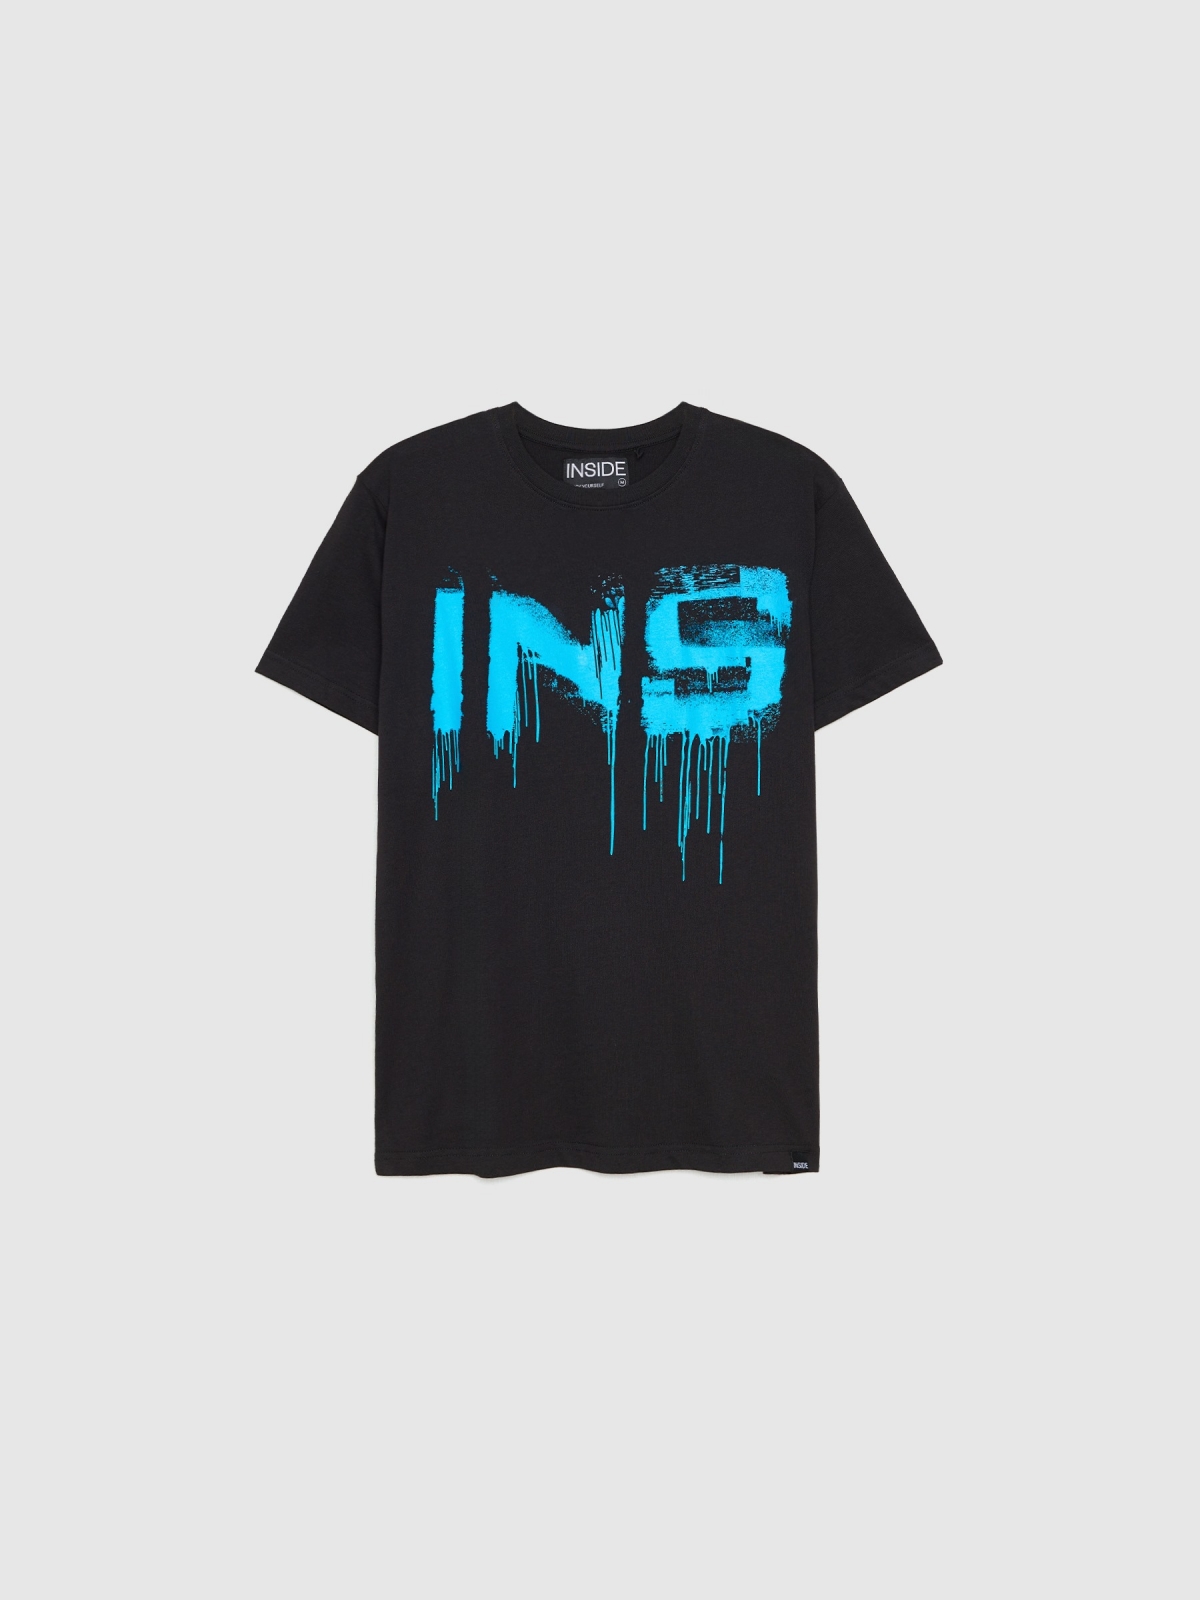  Camiseta INSIDE spray negro